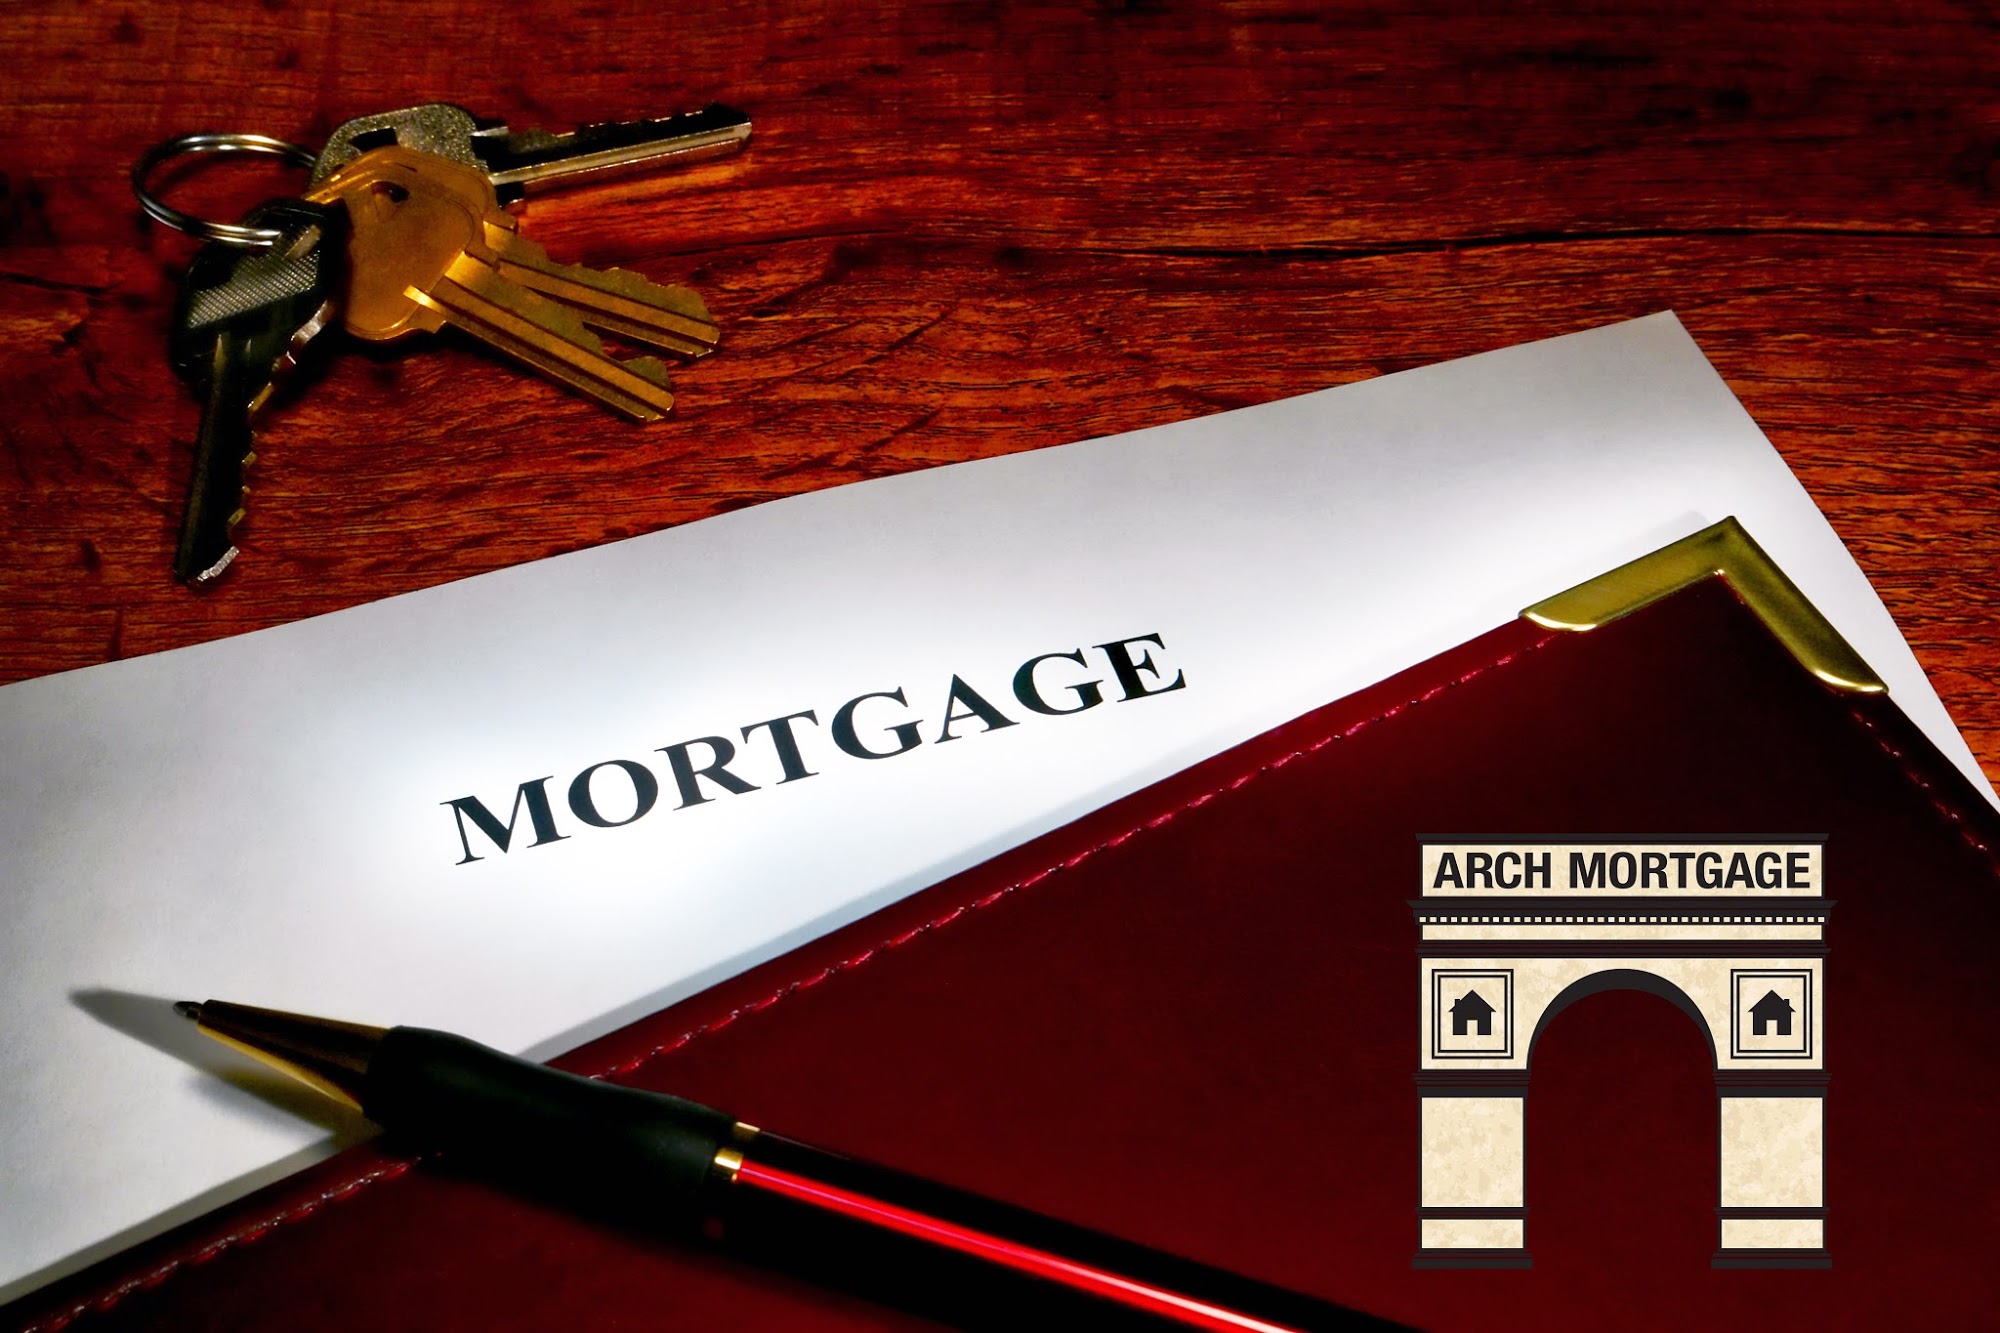 Arch Mortgage Corporation